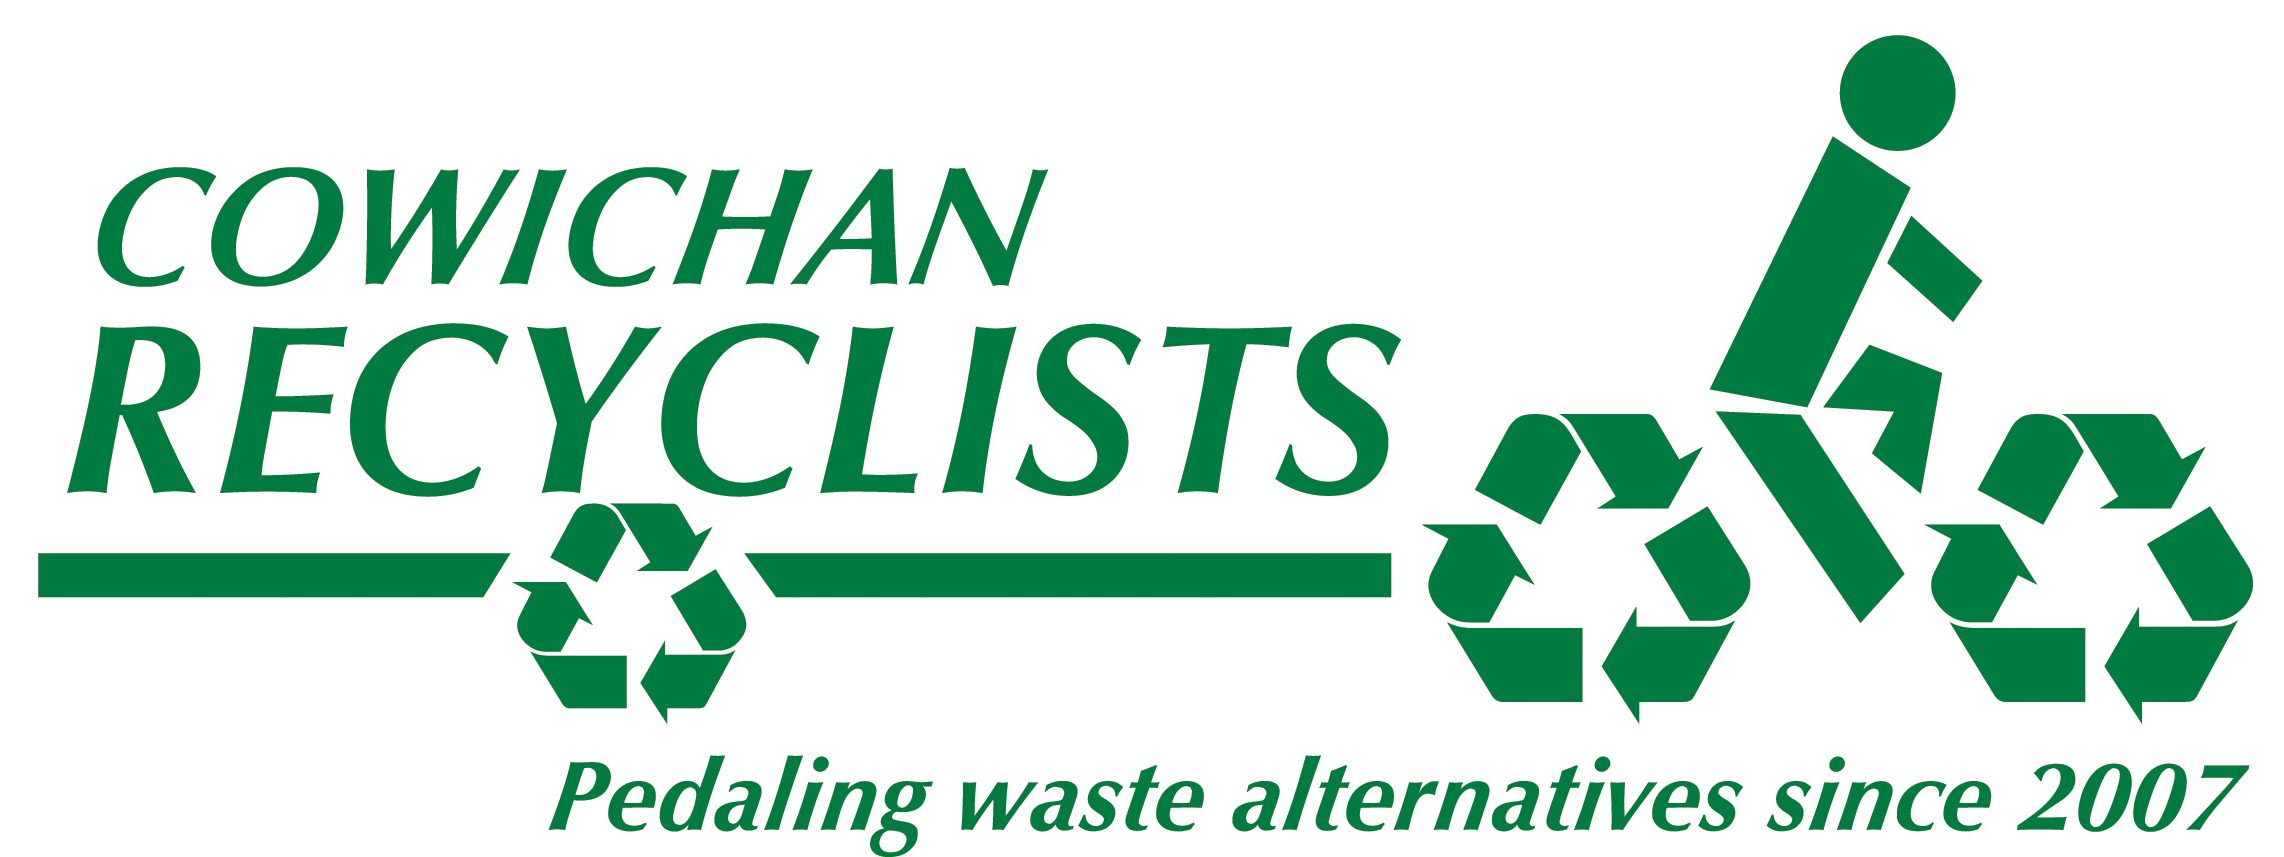 cropped-recyclists-logo3.jpg